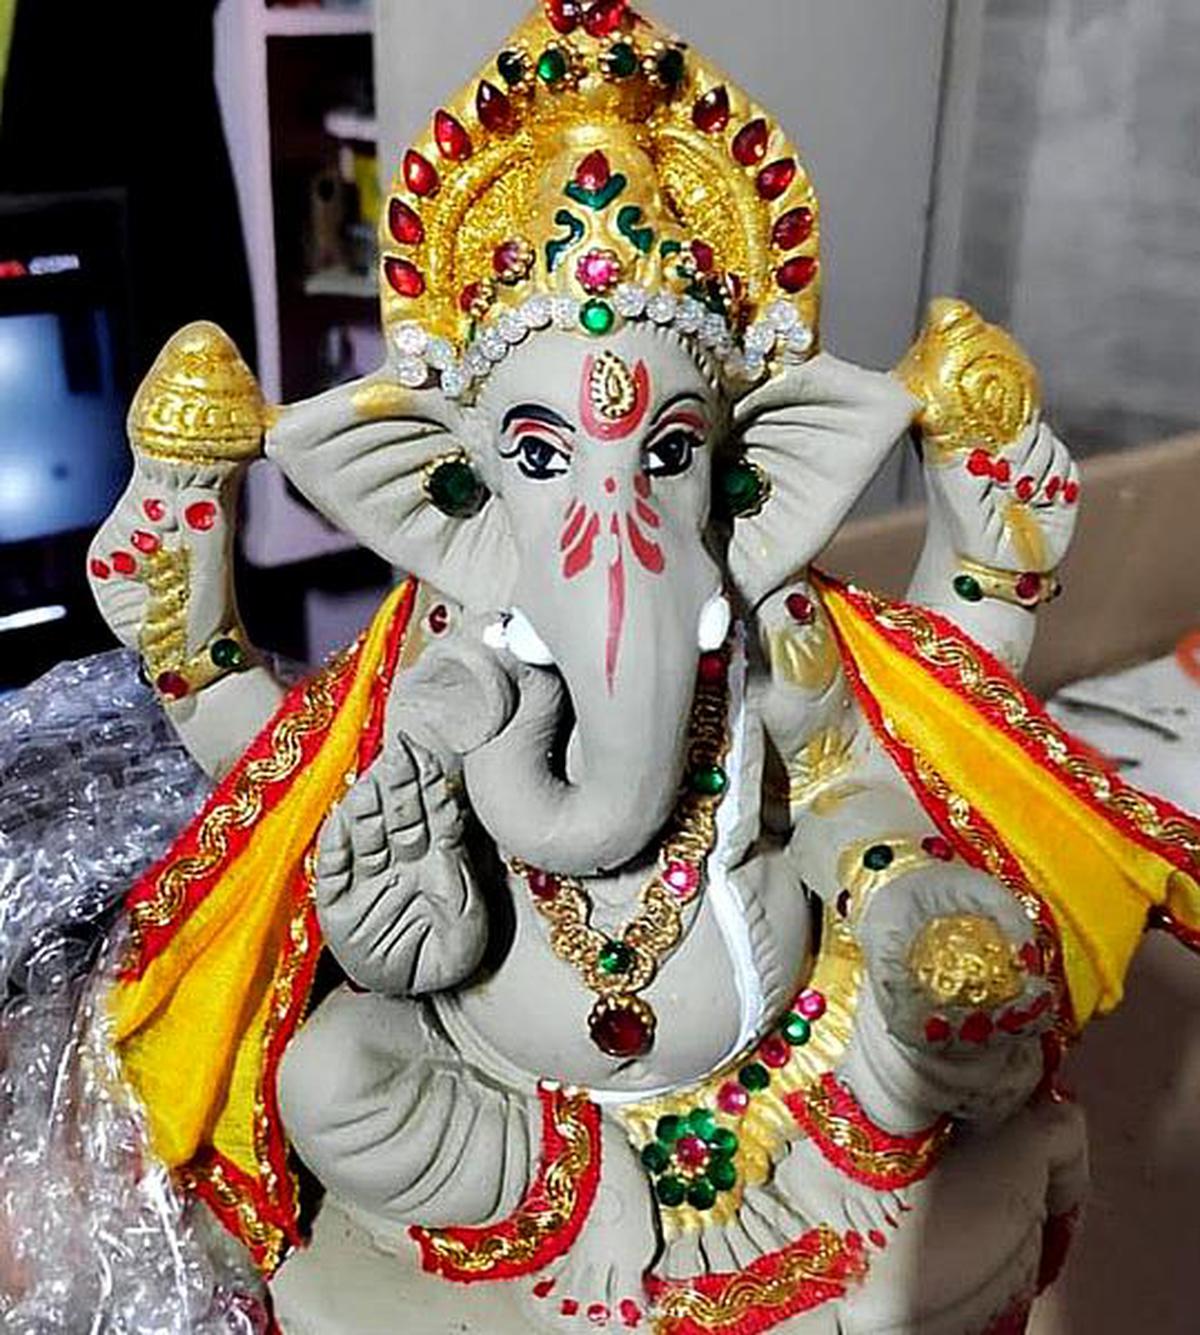 Ganesha idols airlifted to UK - The Hindu